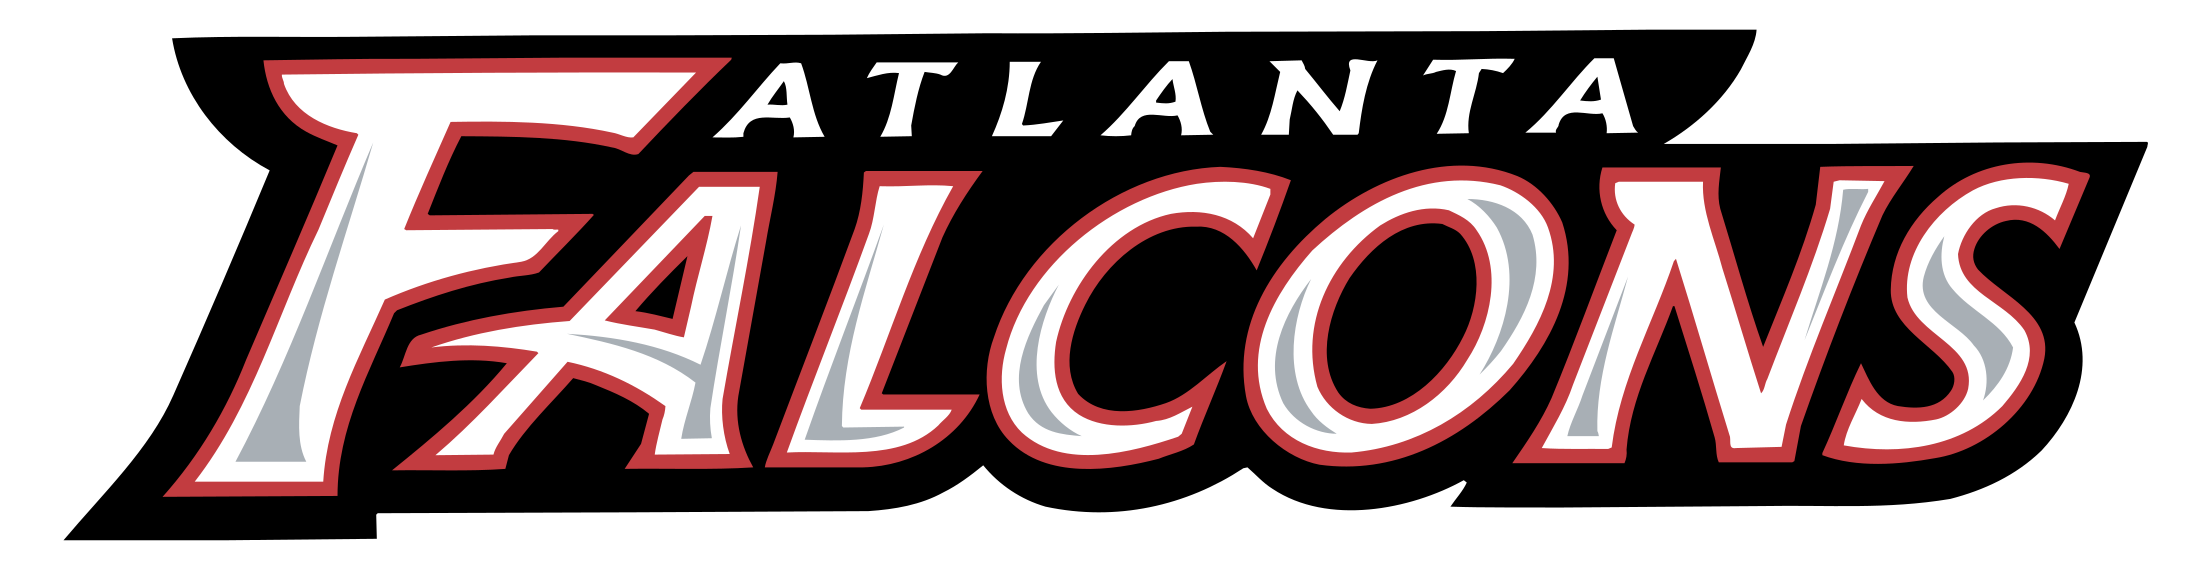 Atlanta Falcons Text Logo PNG Images Transparent Background PNG Play